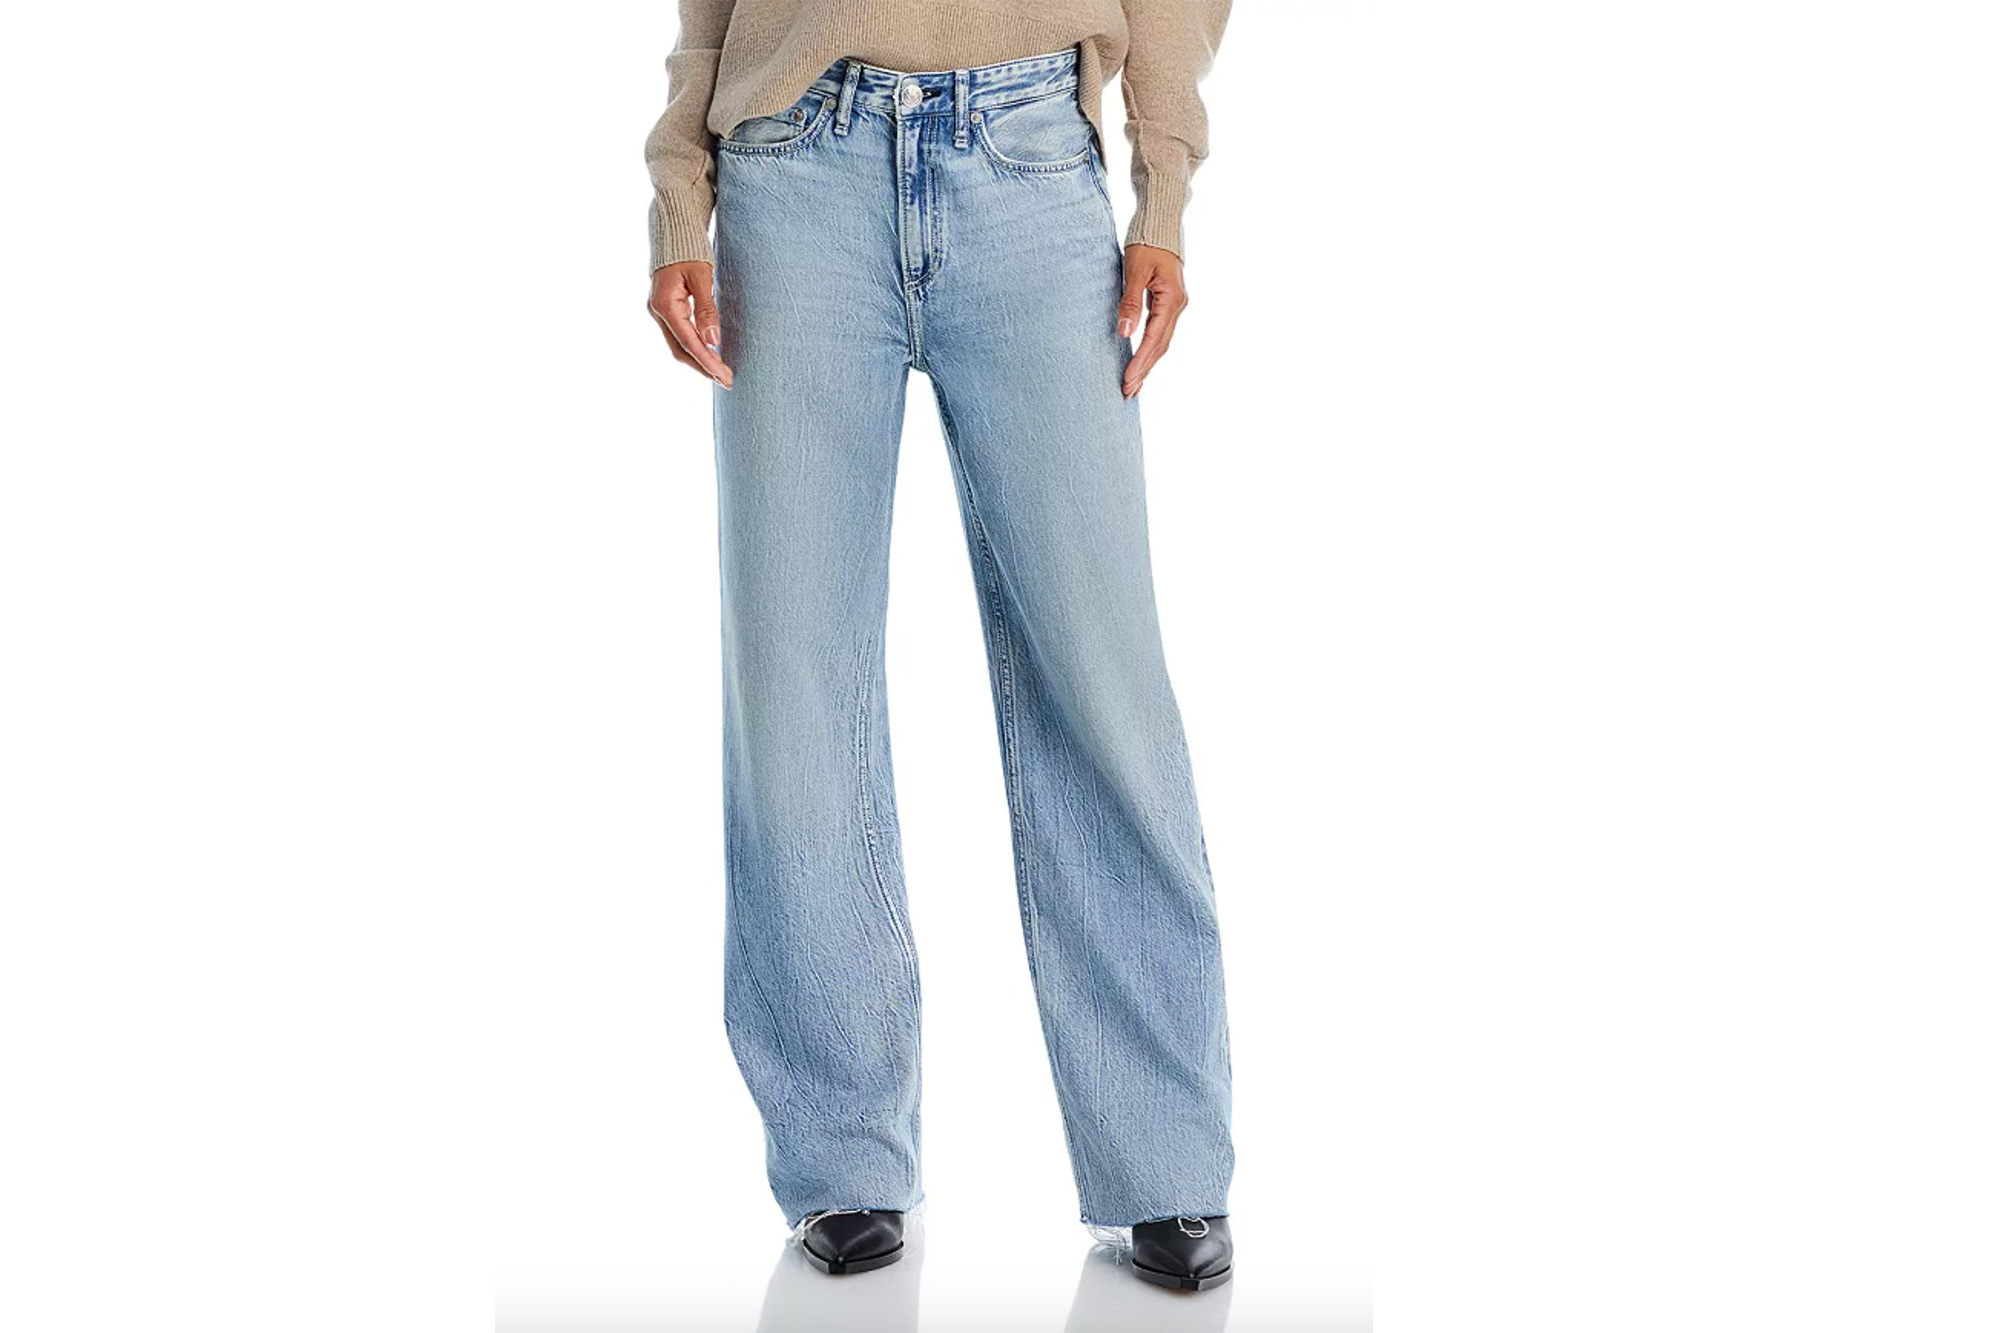 A model in jeans